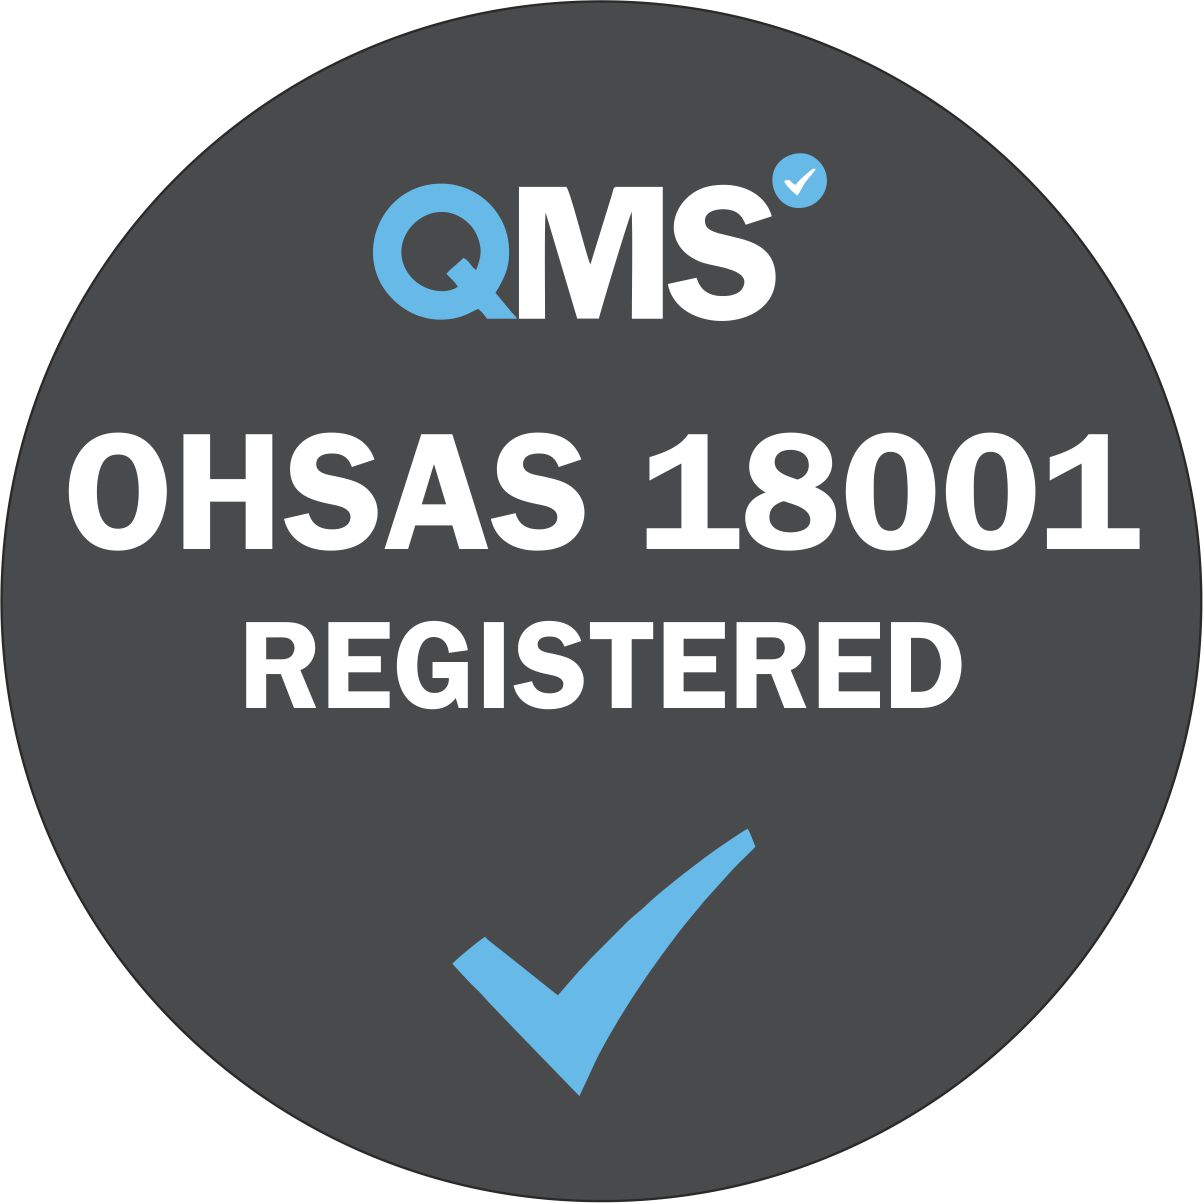 BSL Awarded OHSAS 18001